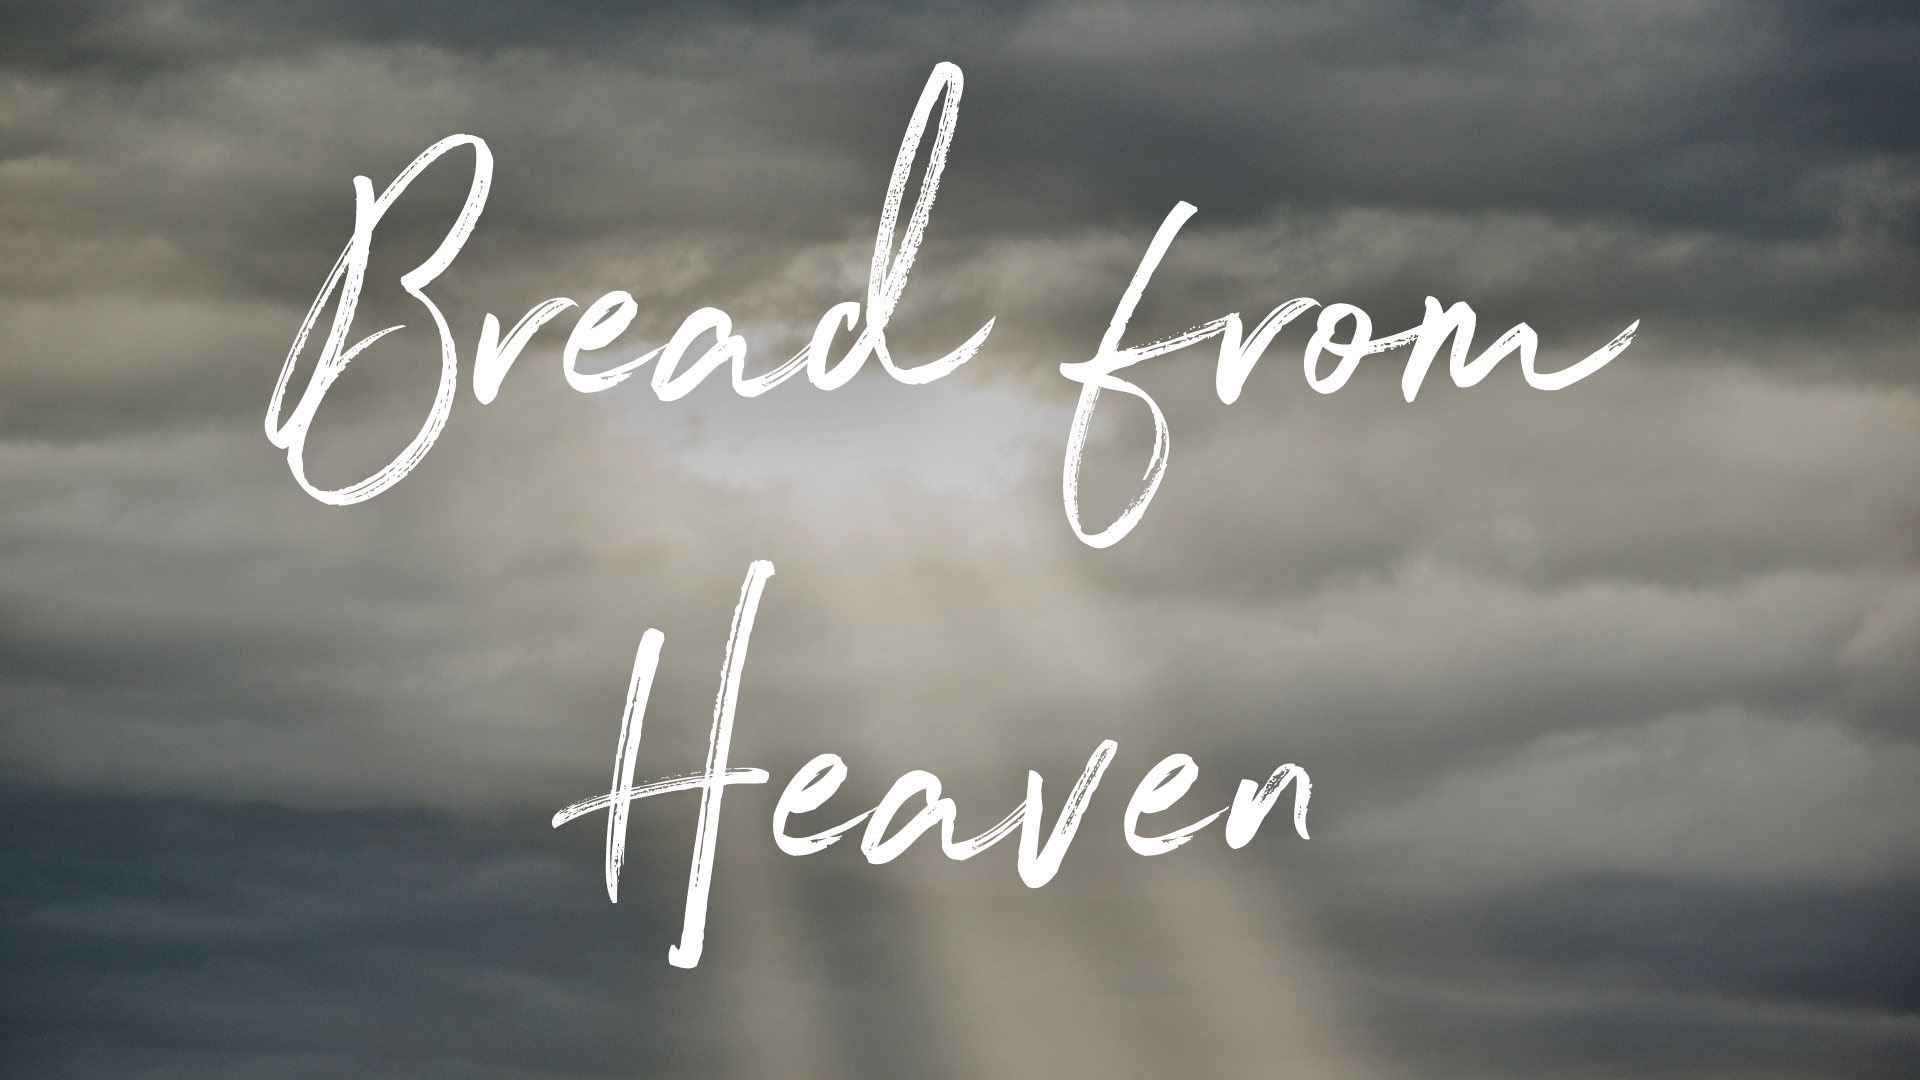 Bread From Heaven banner